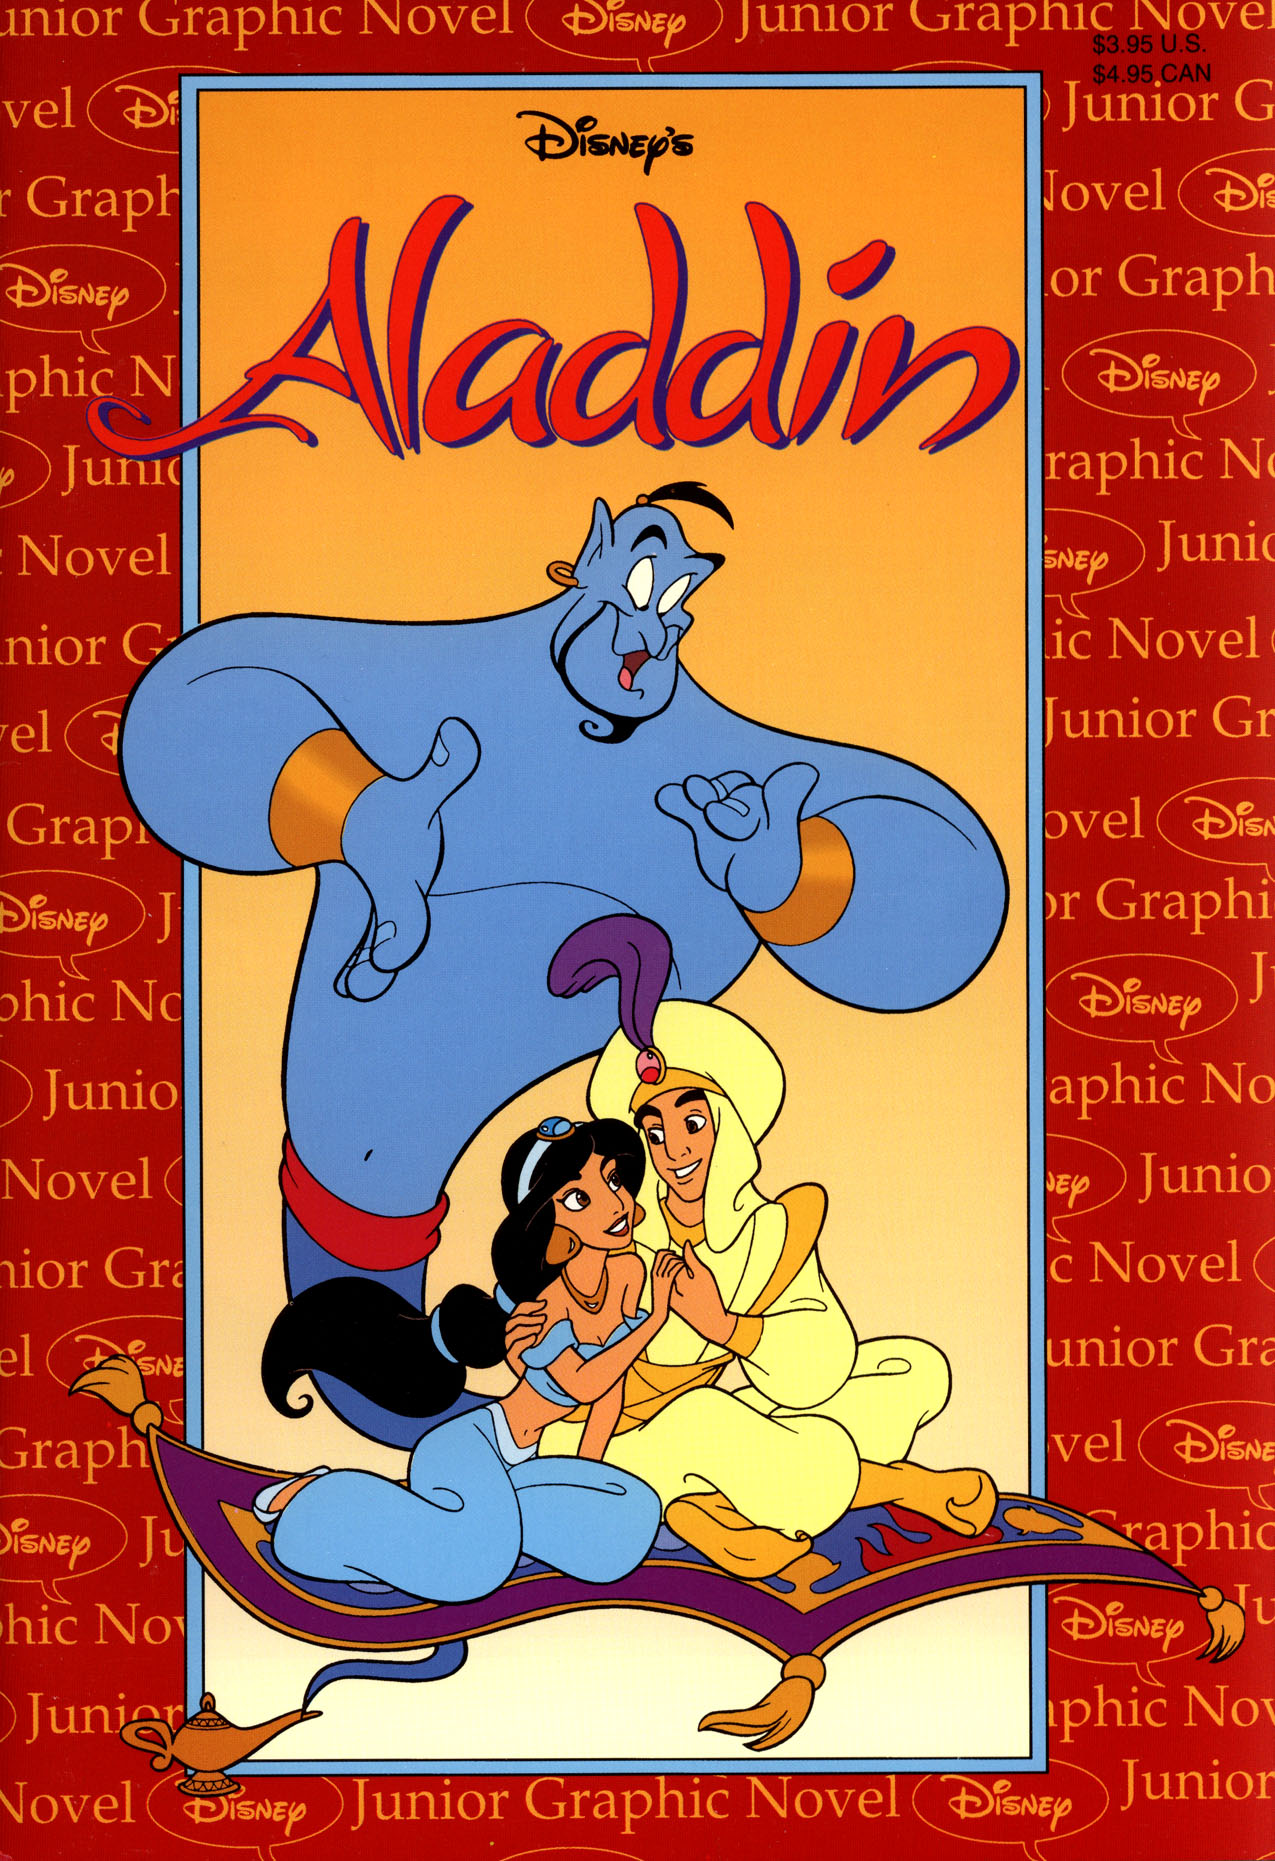 Read online Disney's Junior Graphic Novel Aladdin comic -  Issue # Full - 1